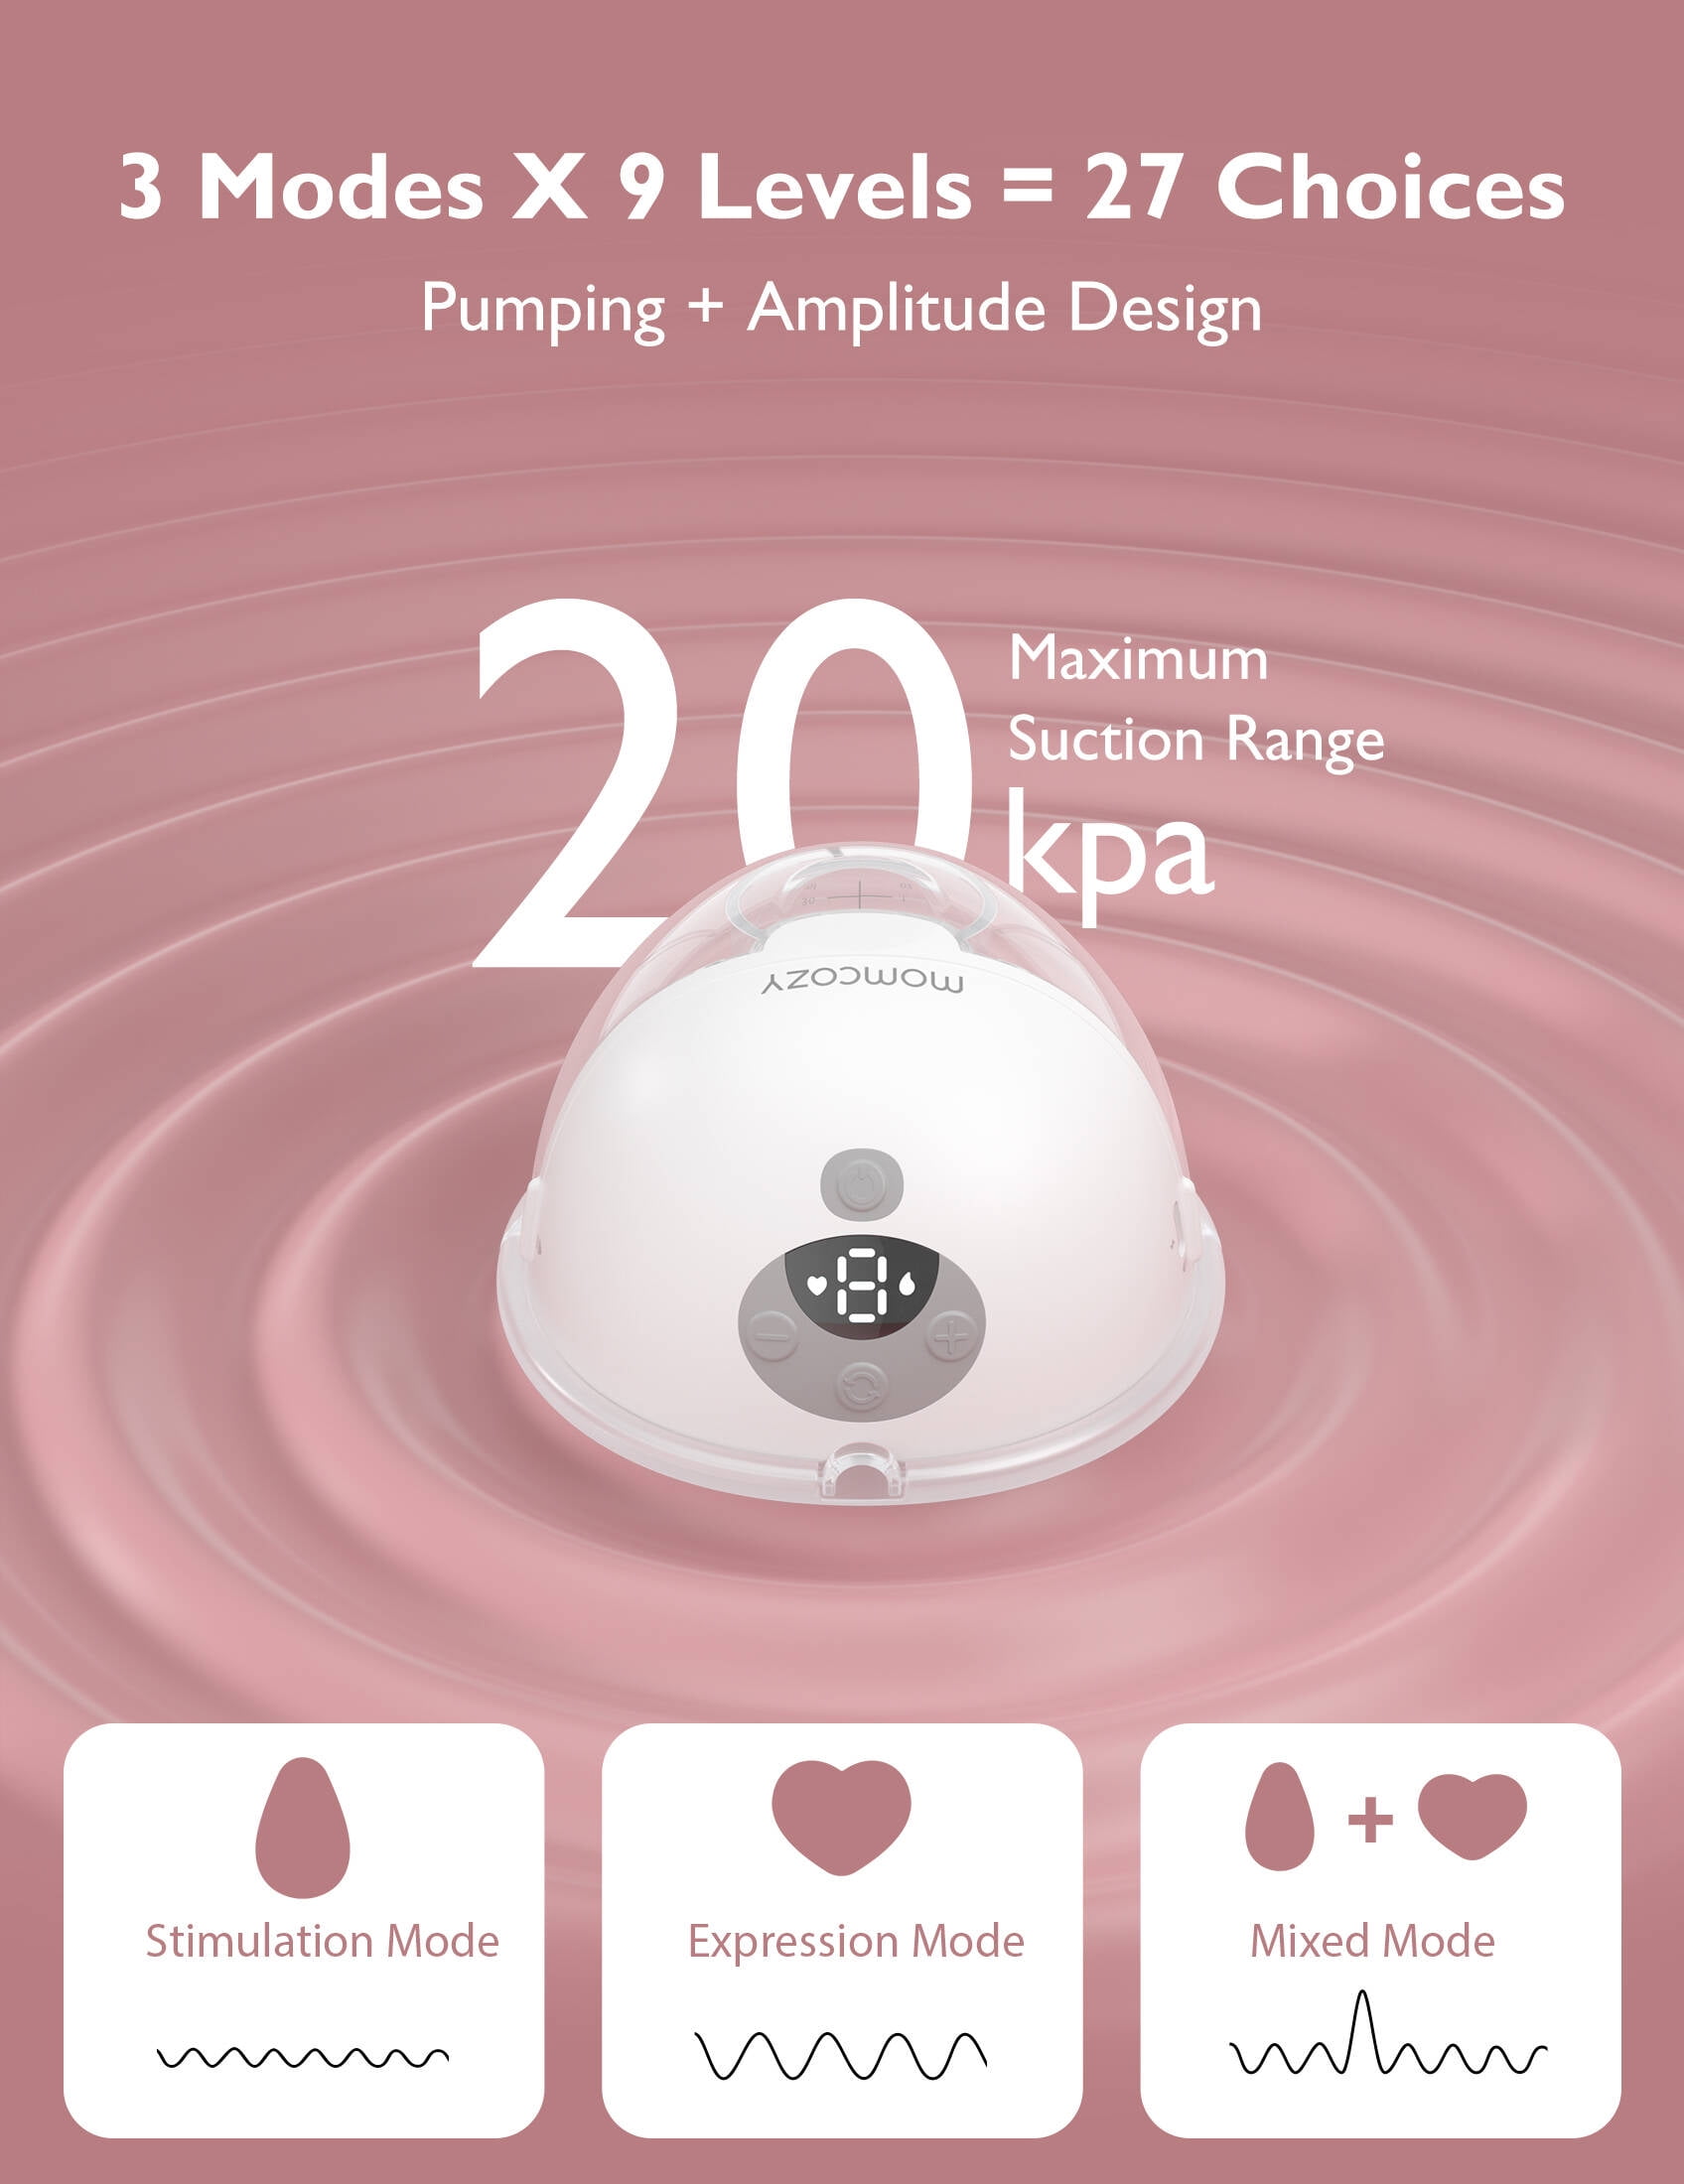 MOOMEE PUMP 2.0- Hands-free, Smart Wearable pump – Moomee